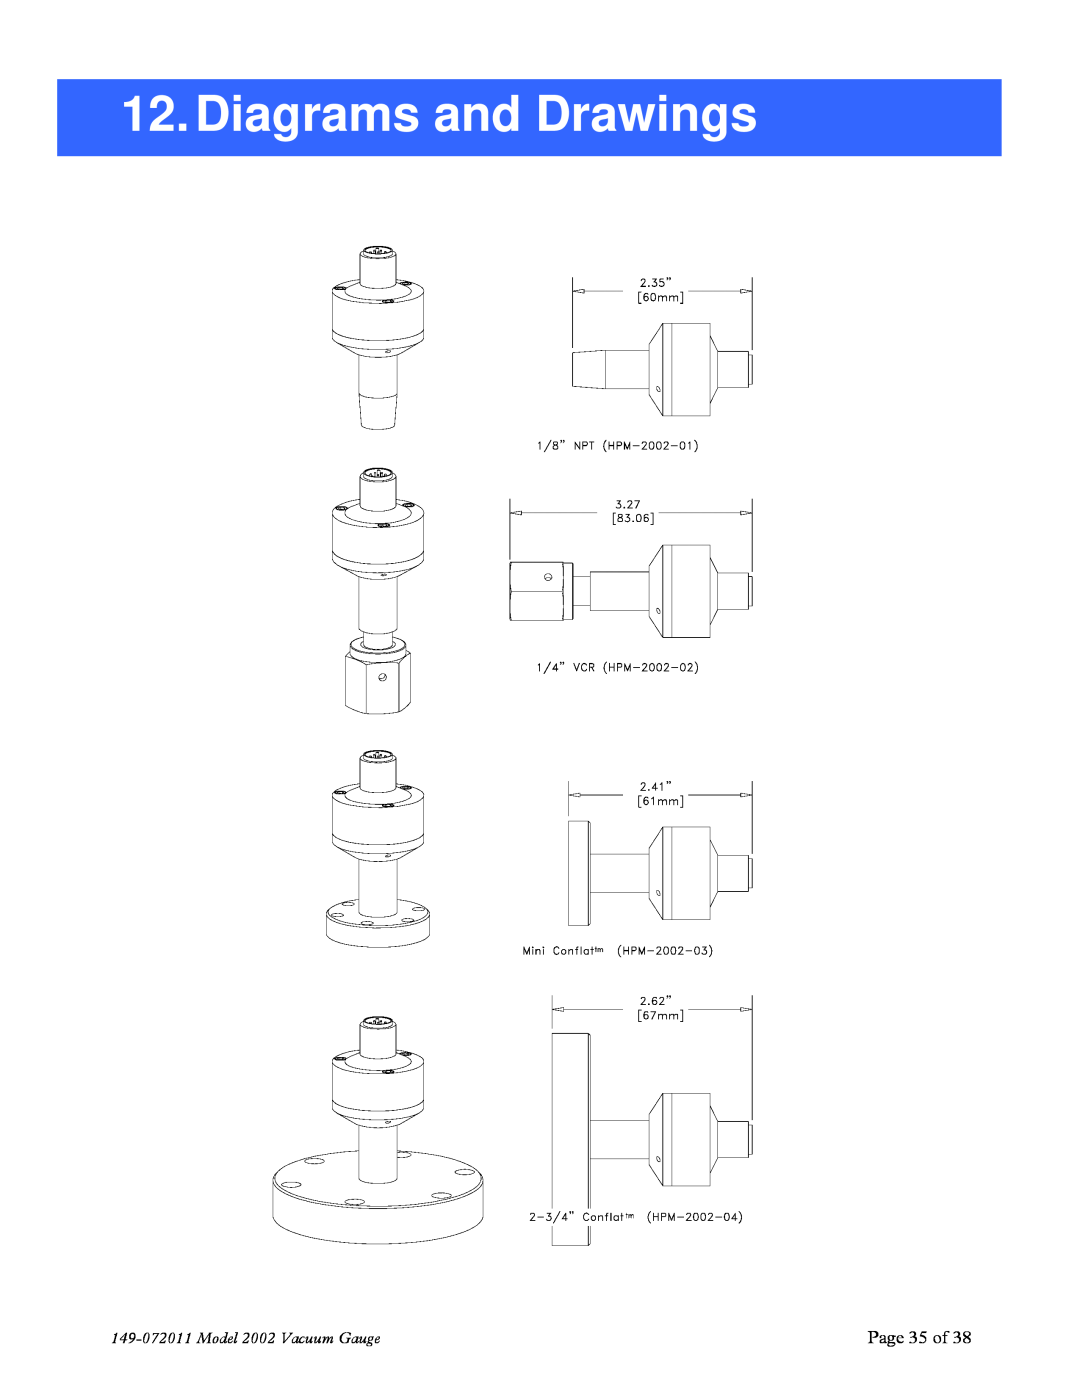 Teledyne instruction manual Diagrams and Drawings, Page 35 of, Model 2002 Vacuum Gauge 